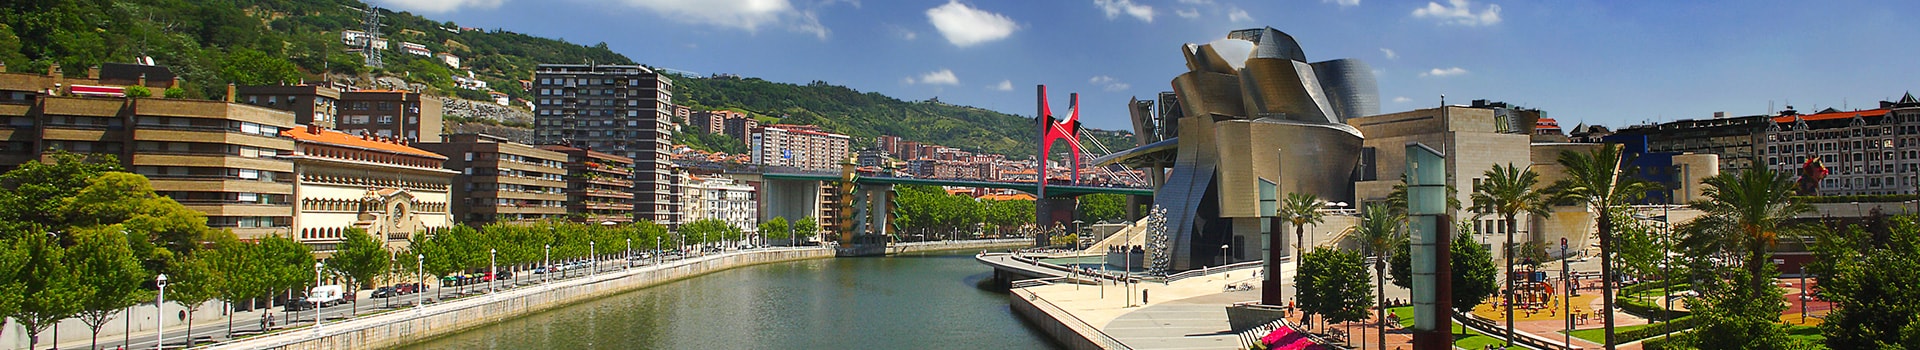 Sevilla - Bilbao